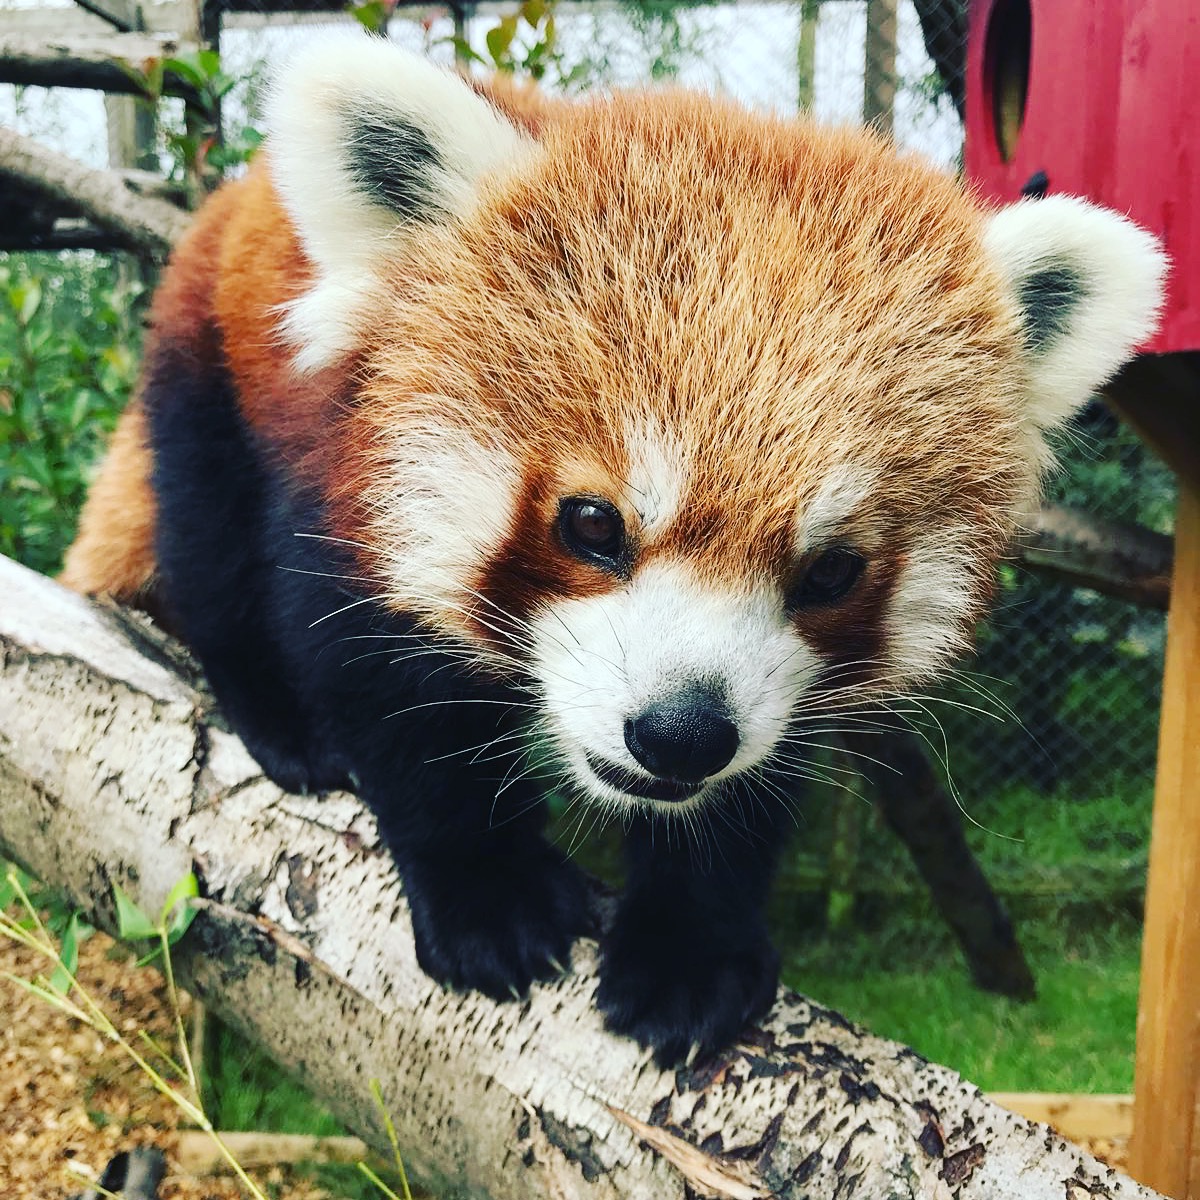 An image of a red panda's face close up